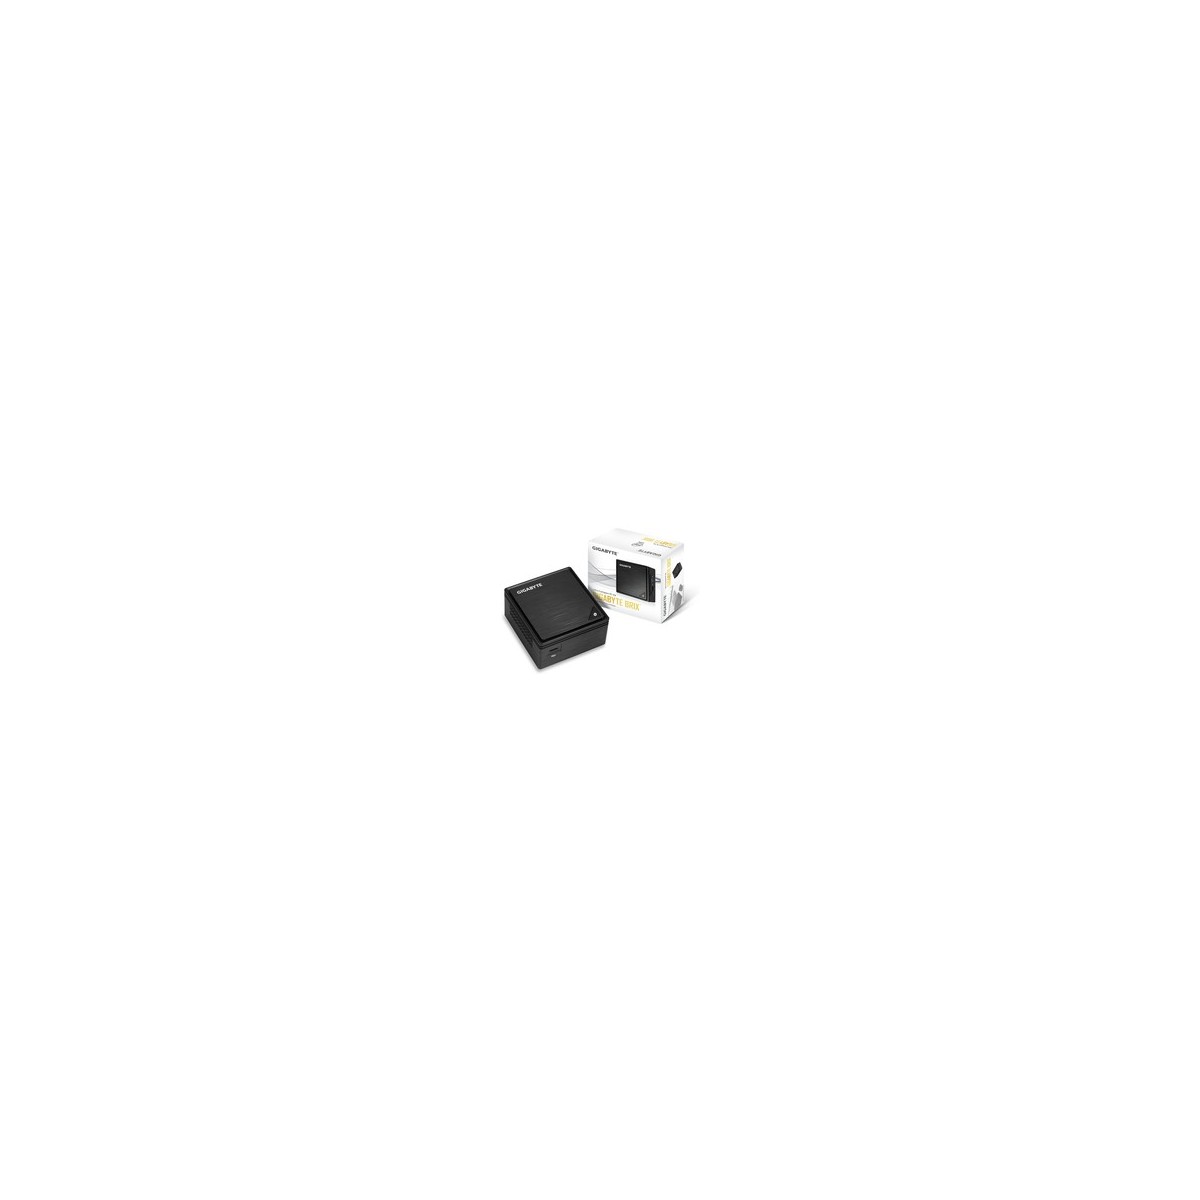 Gigabyte GB-BPCE-3455 - 0.69L sized PC - Mini PC barebone - BGA 1296 - Serial ATA III - Ethernet LAN - Wi-Fi 5 (802.11ac)